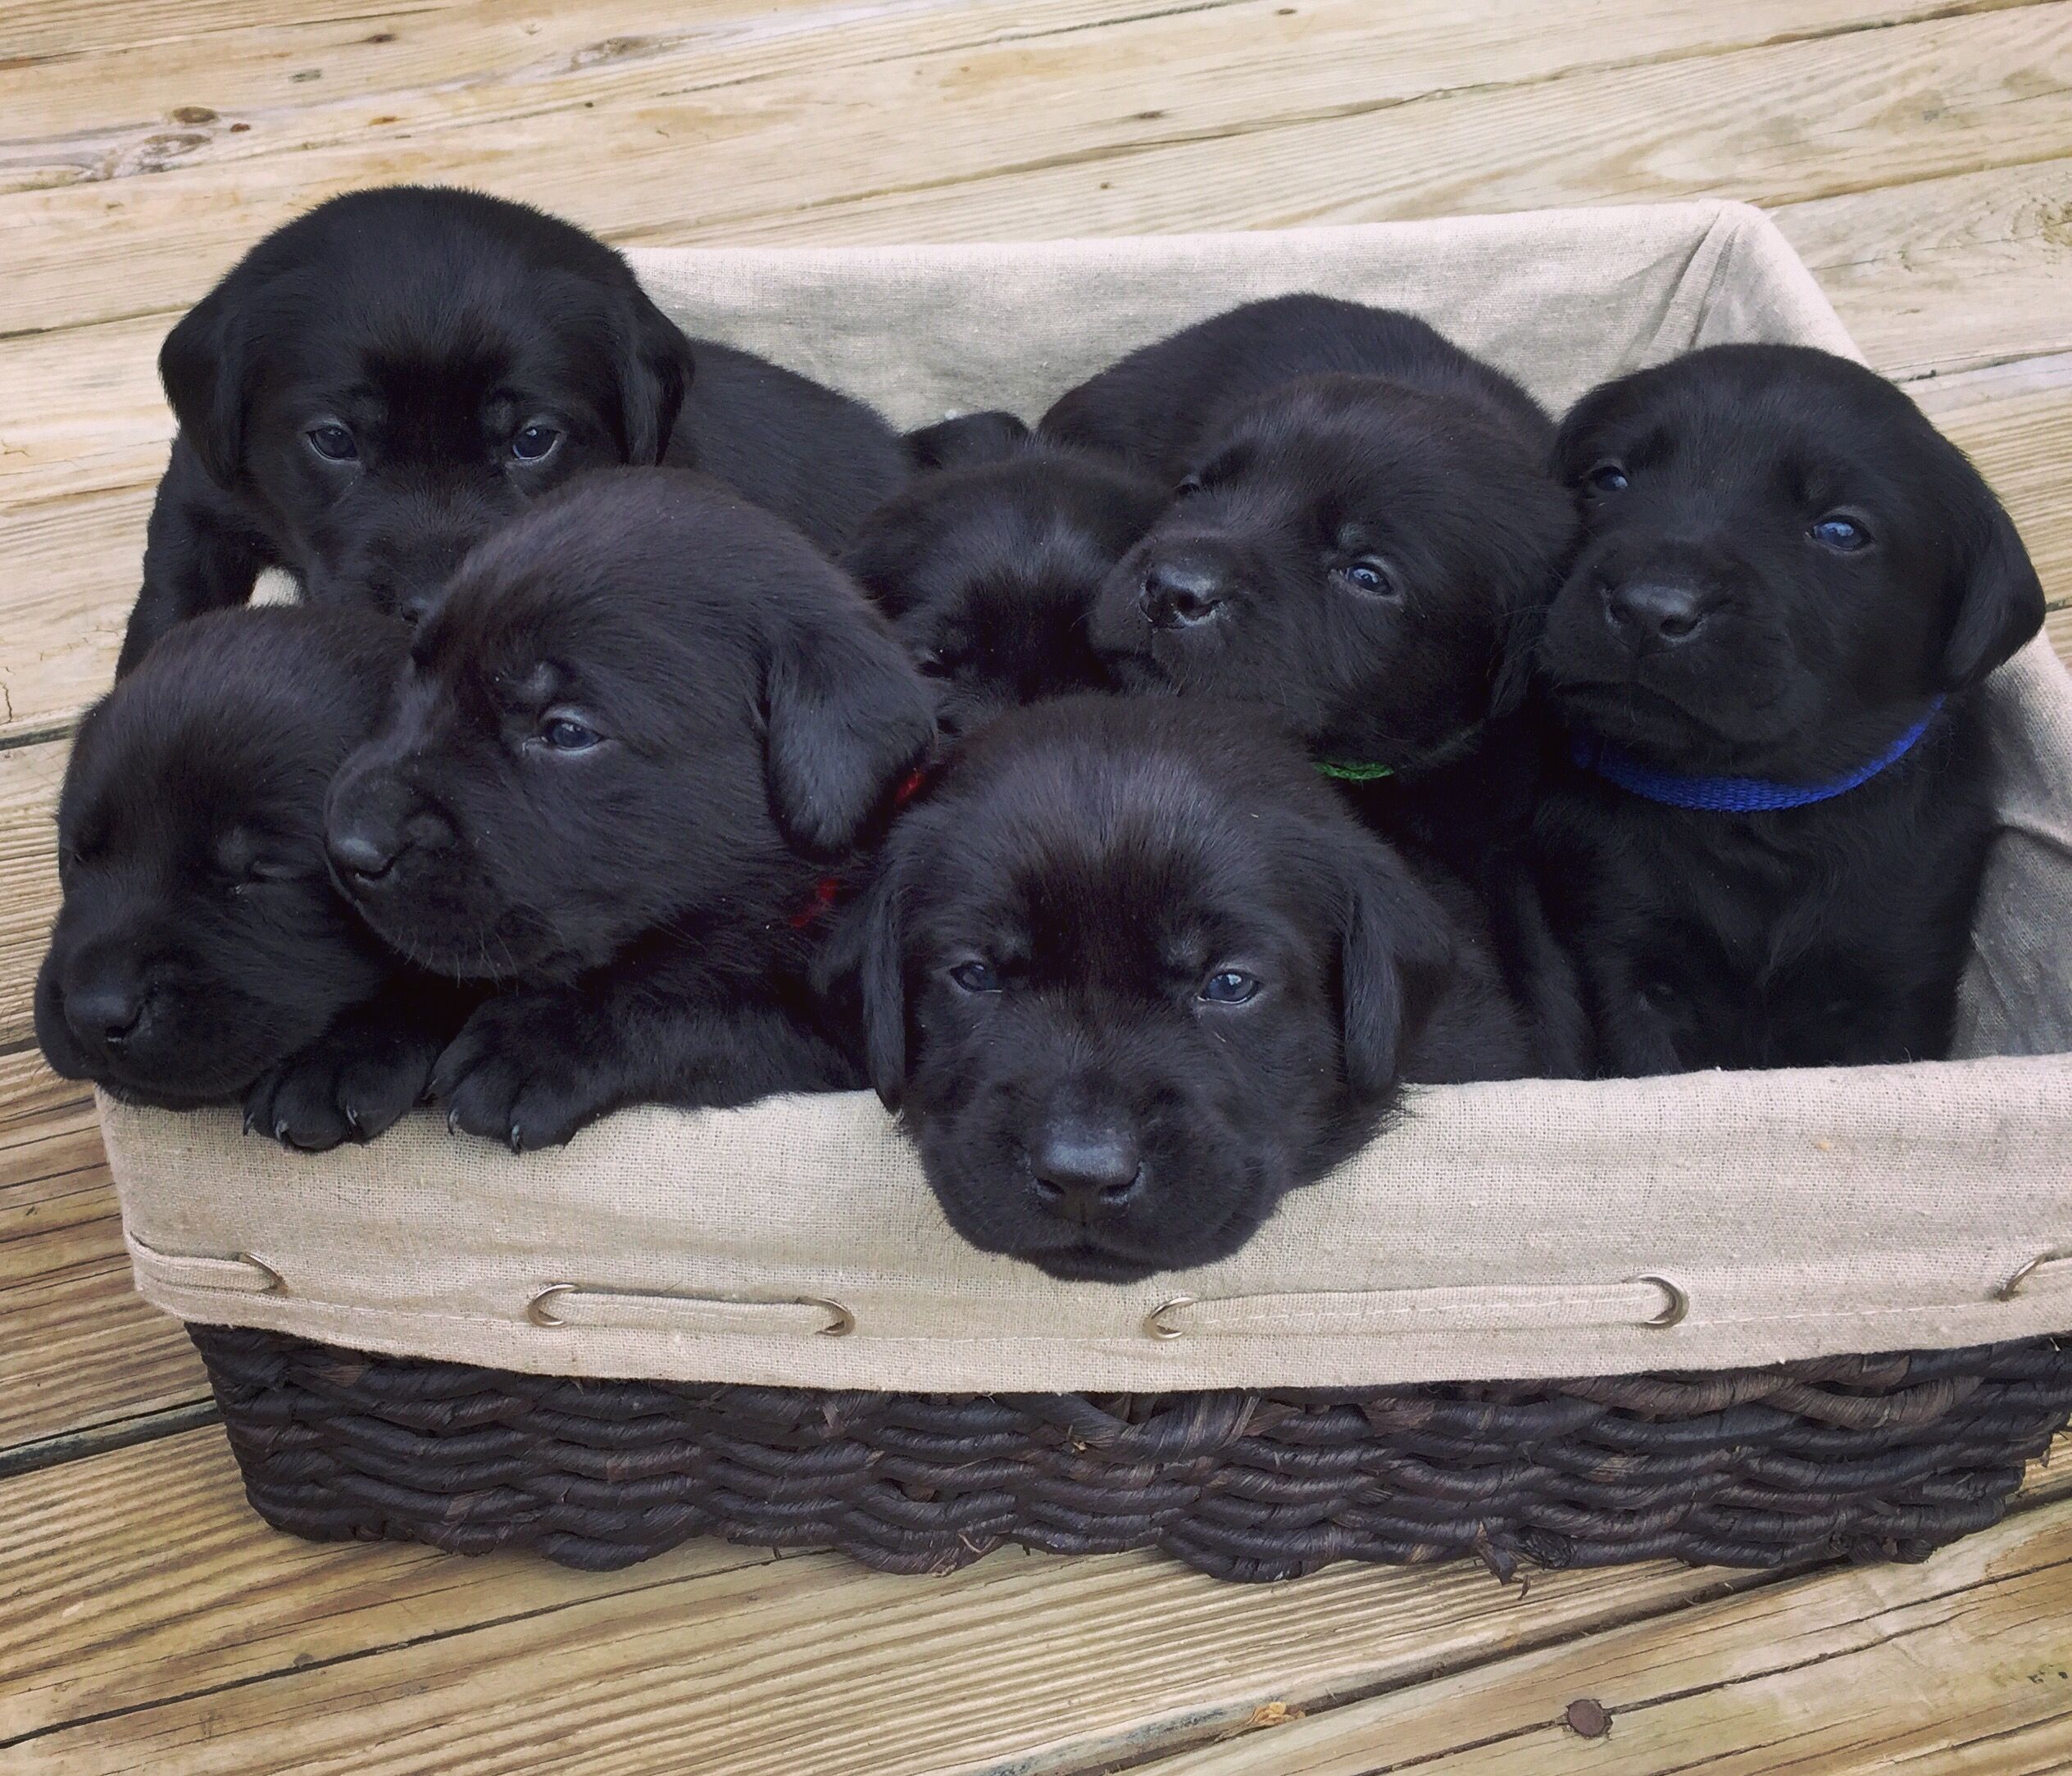 2 week old black lab puppies | Puppies | Pinterest | Black lab ...